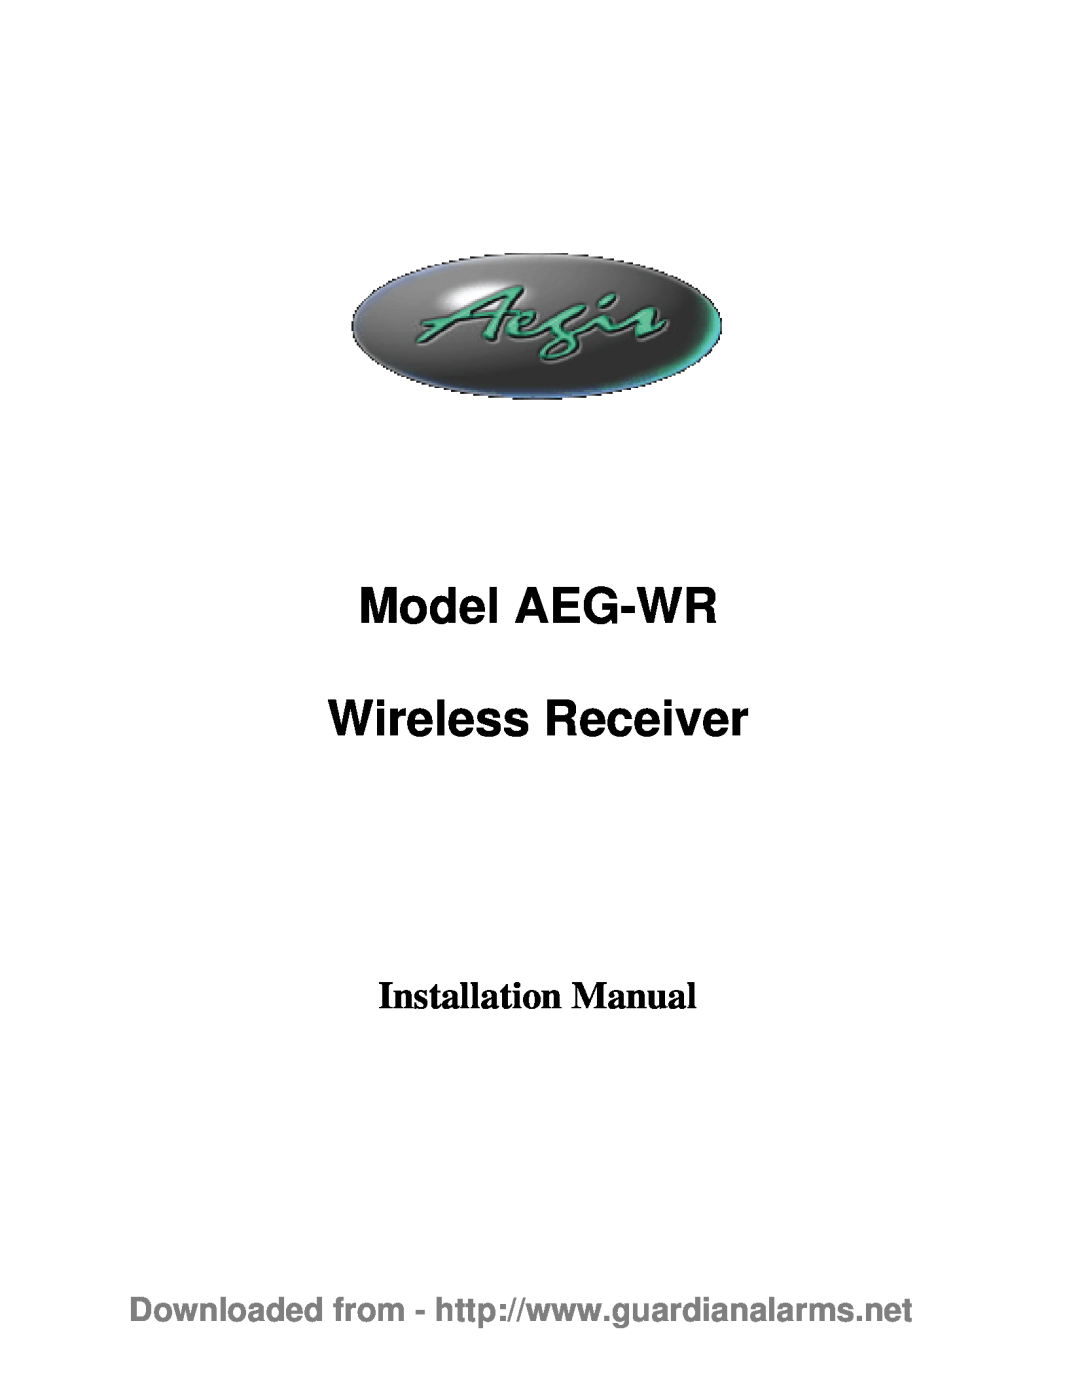 Aegis Micro installation manual Installation Manual, Model AEG-WR Wireless Receiver 